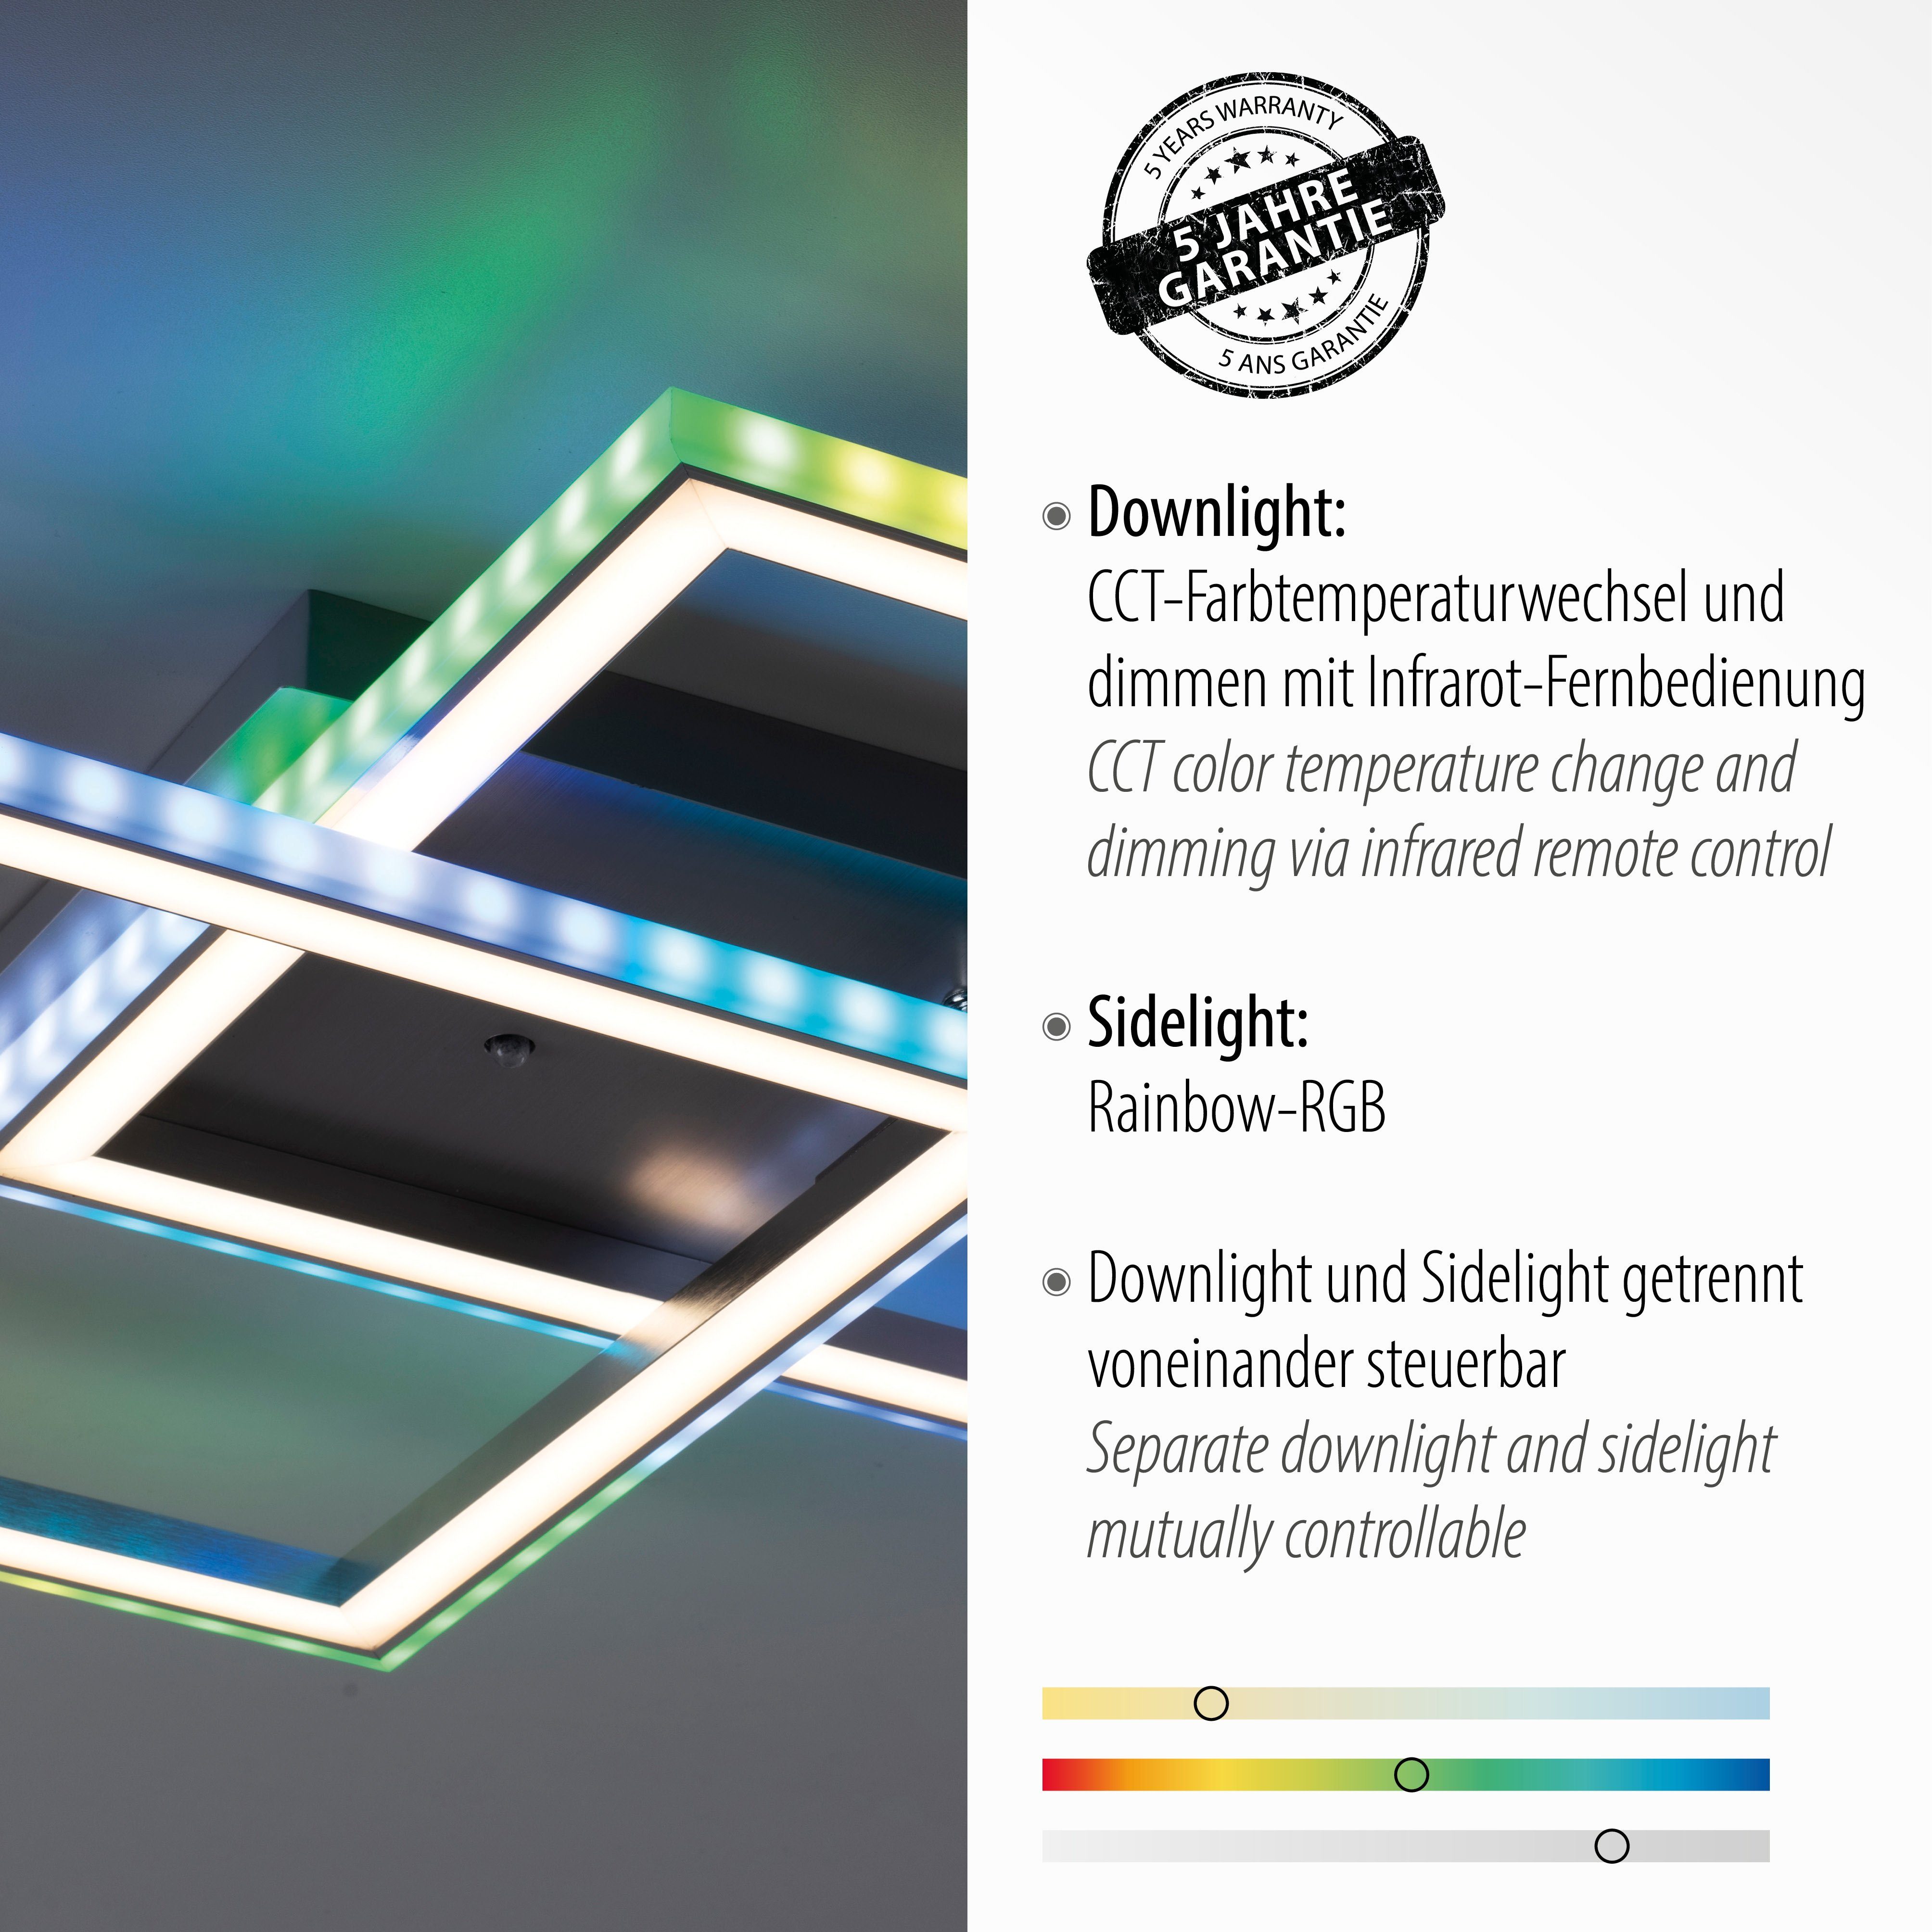 inkl., Direkt dimmbar Leuchten Fernbedienung, LED fest integriert, kaltweiß, - über CCT RGB-Rainbow, LeuchtenDirekt Deckenleuchte - Infrarot LED, FELIX60, warmweiß